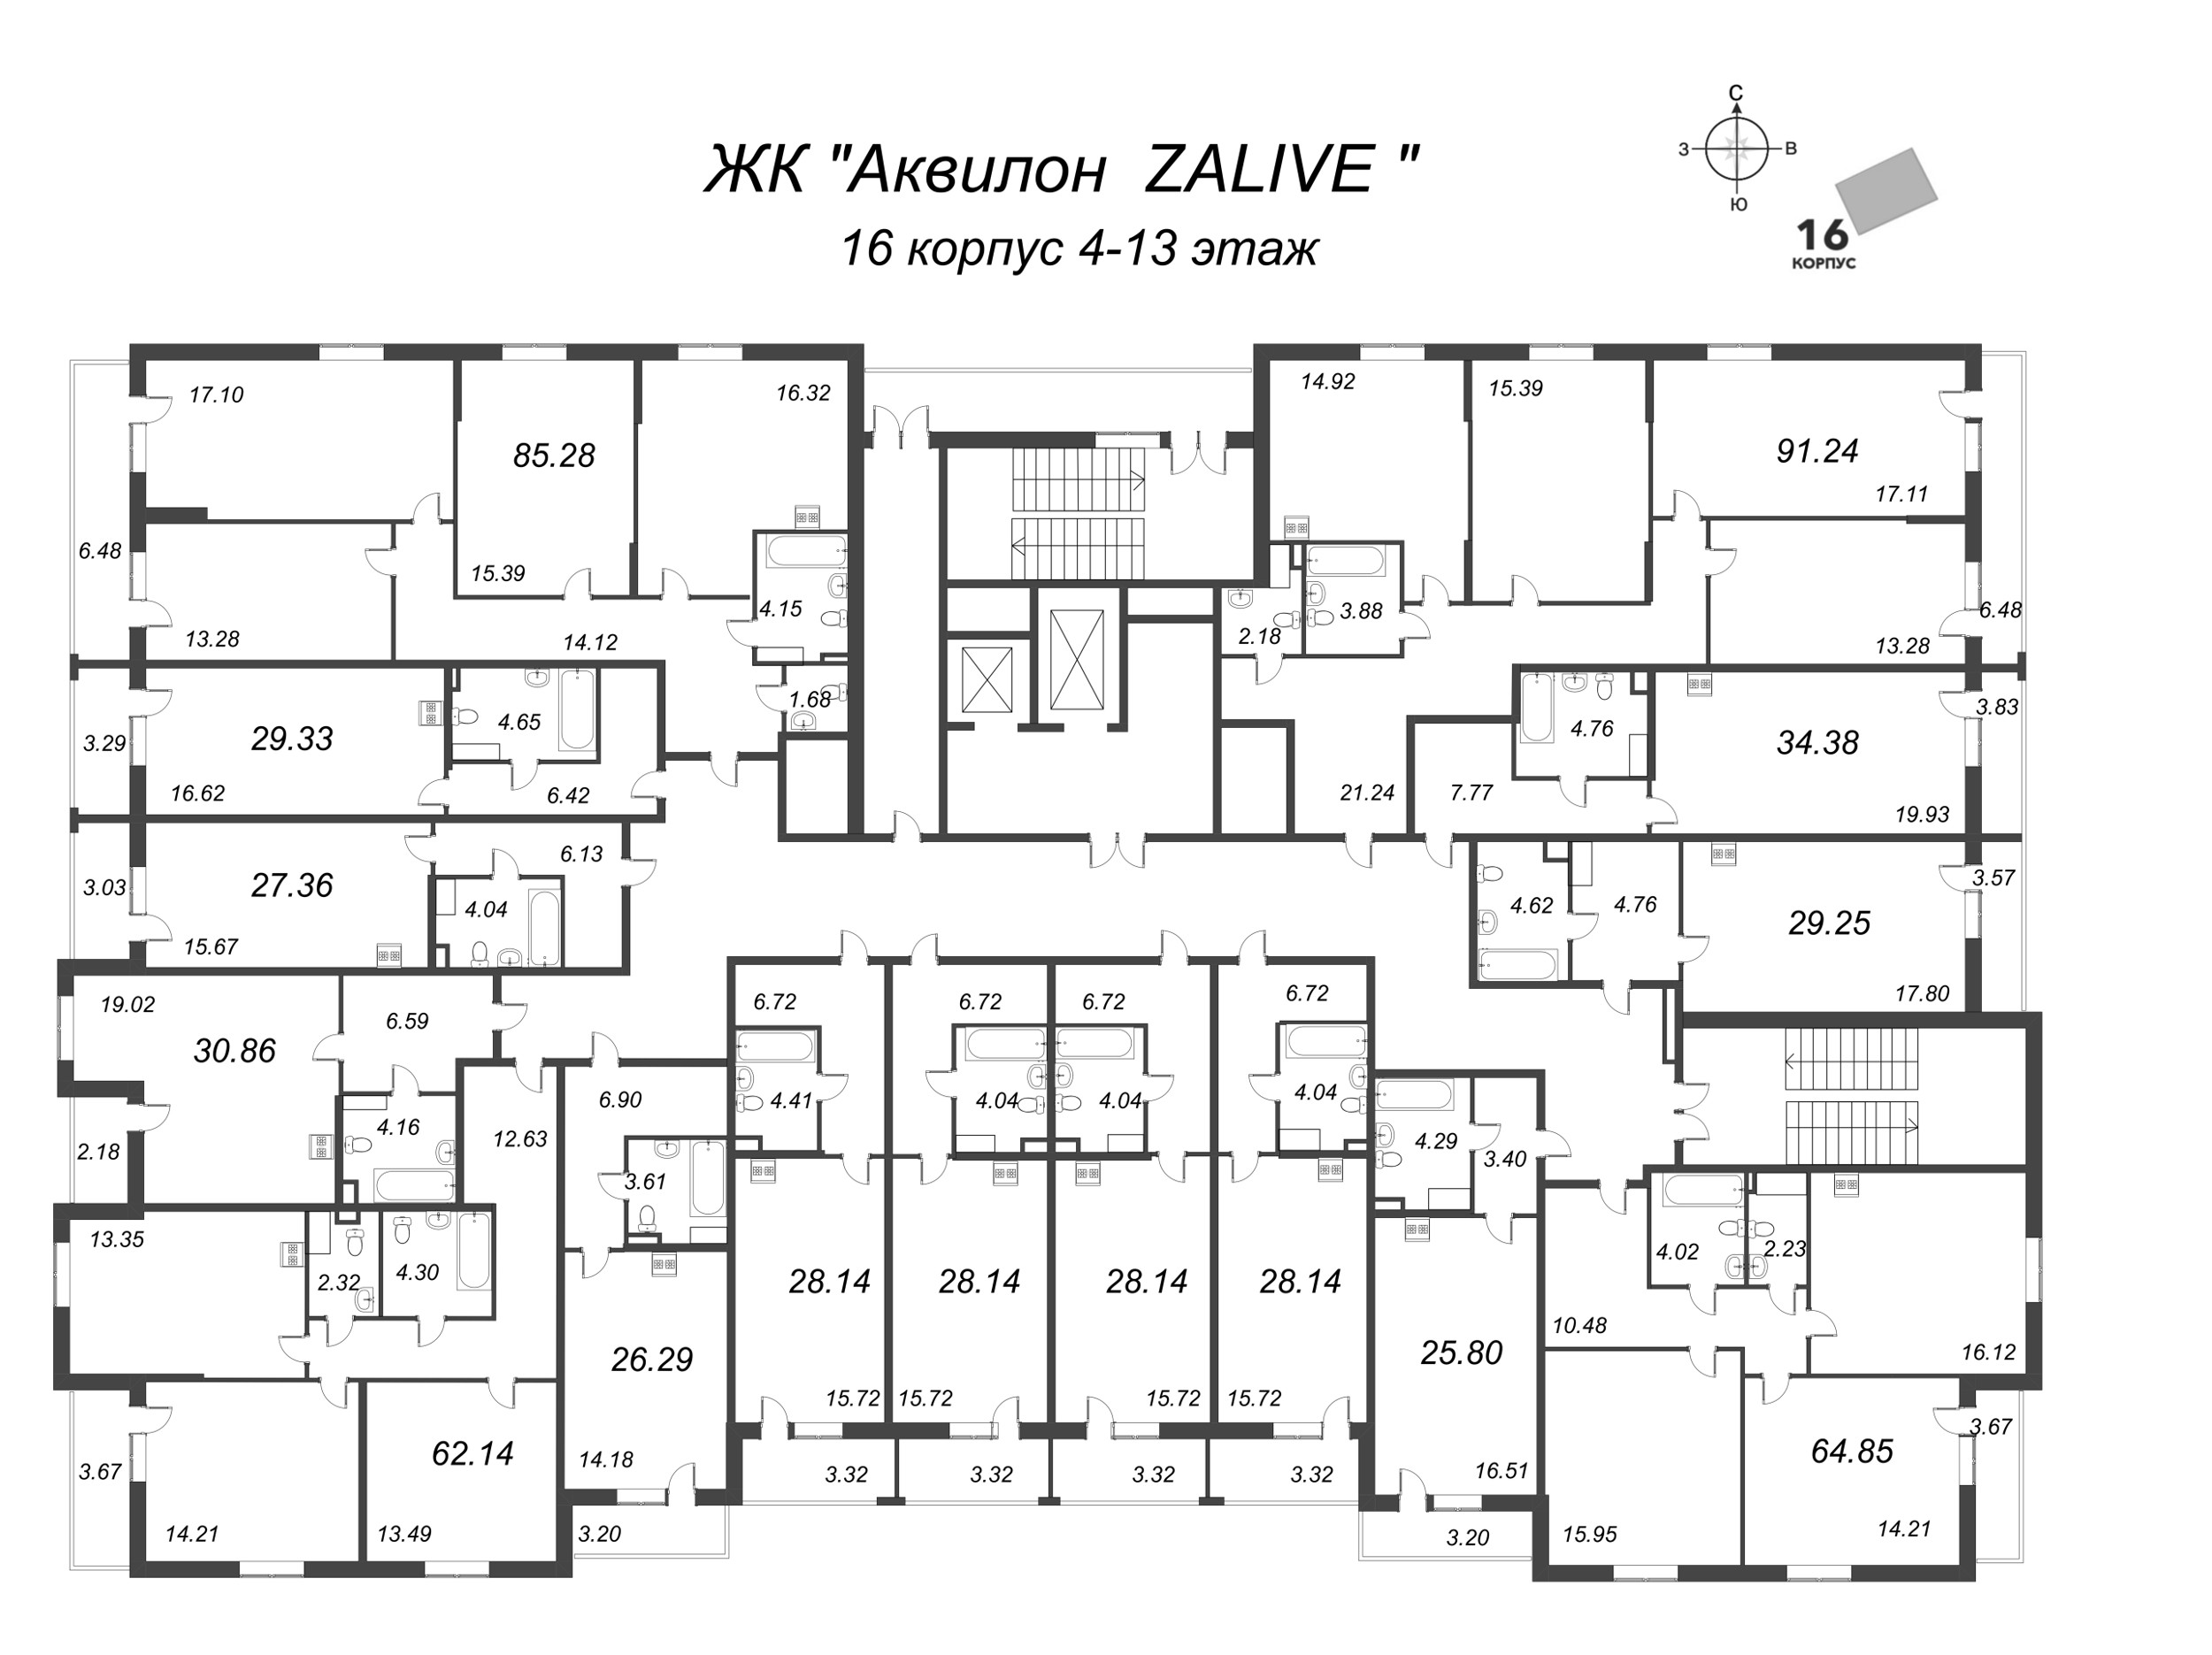 4-комнатная (Евро) квартира, 85.28 м² - планировка этажа